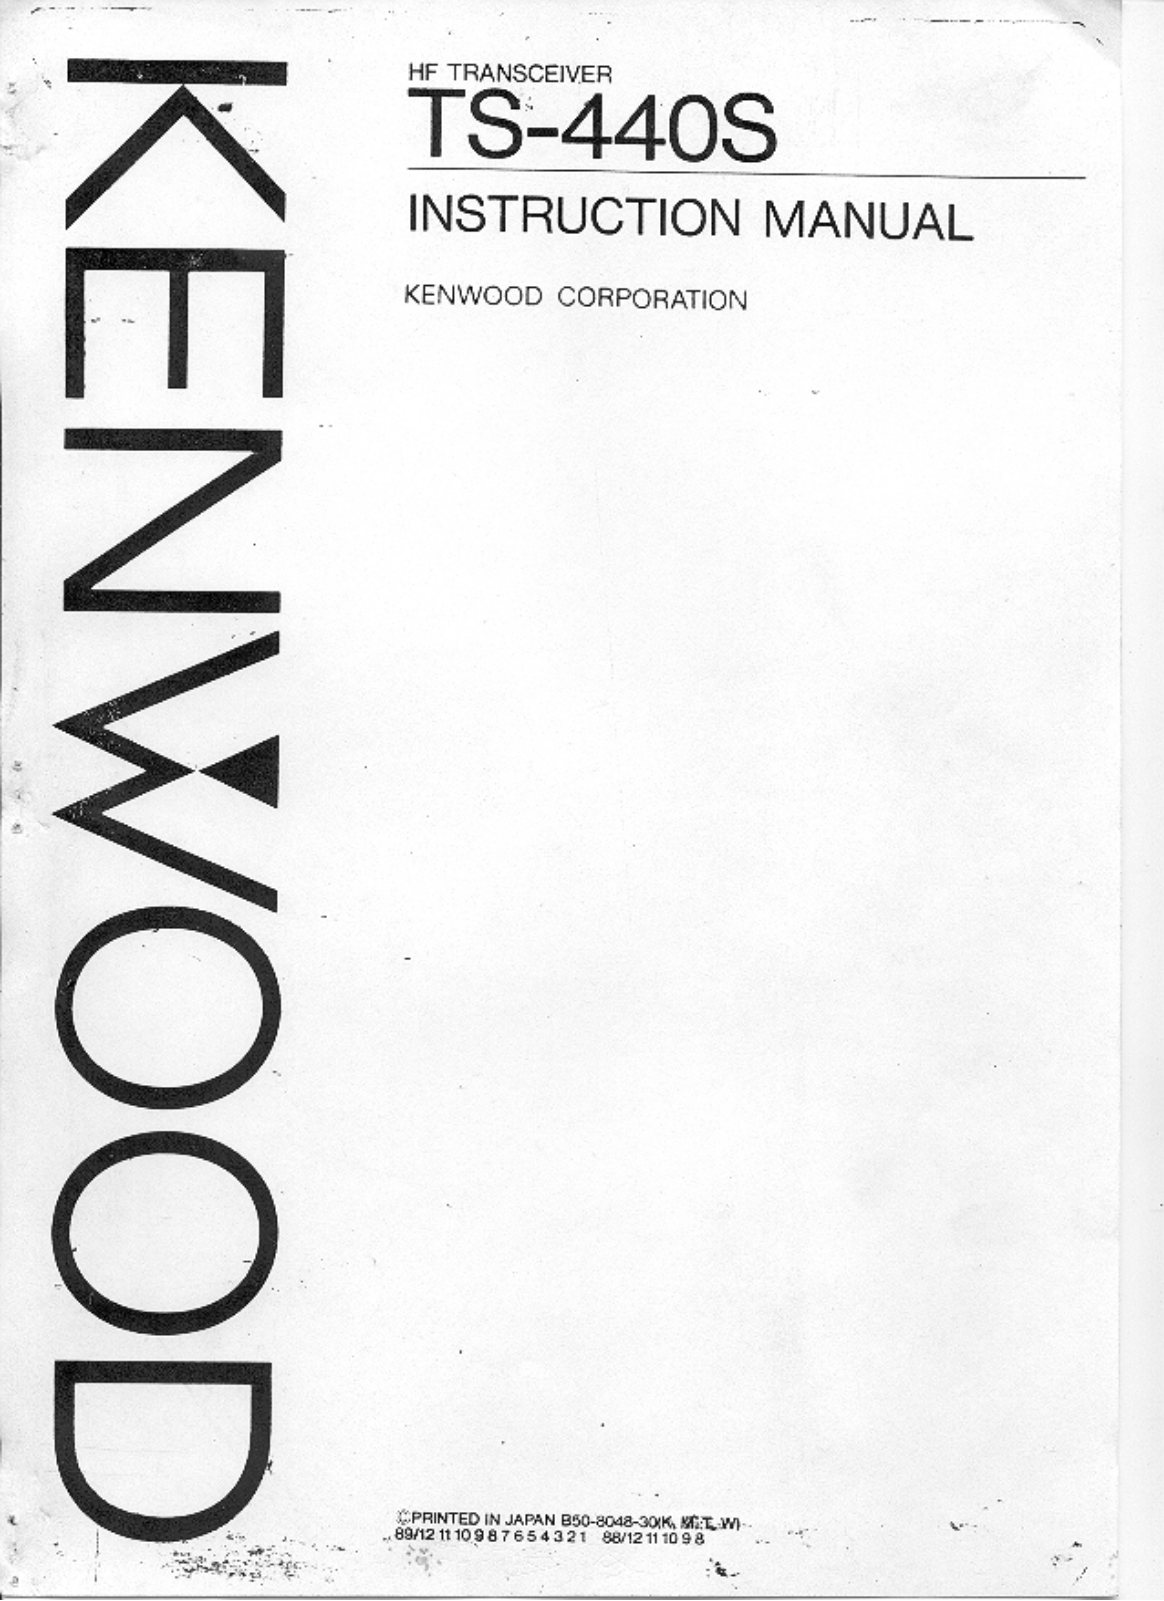 Kenwood TS-440s User Manual